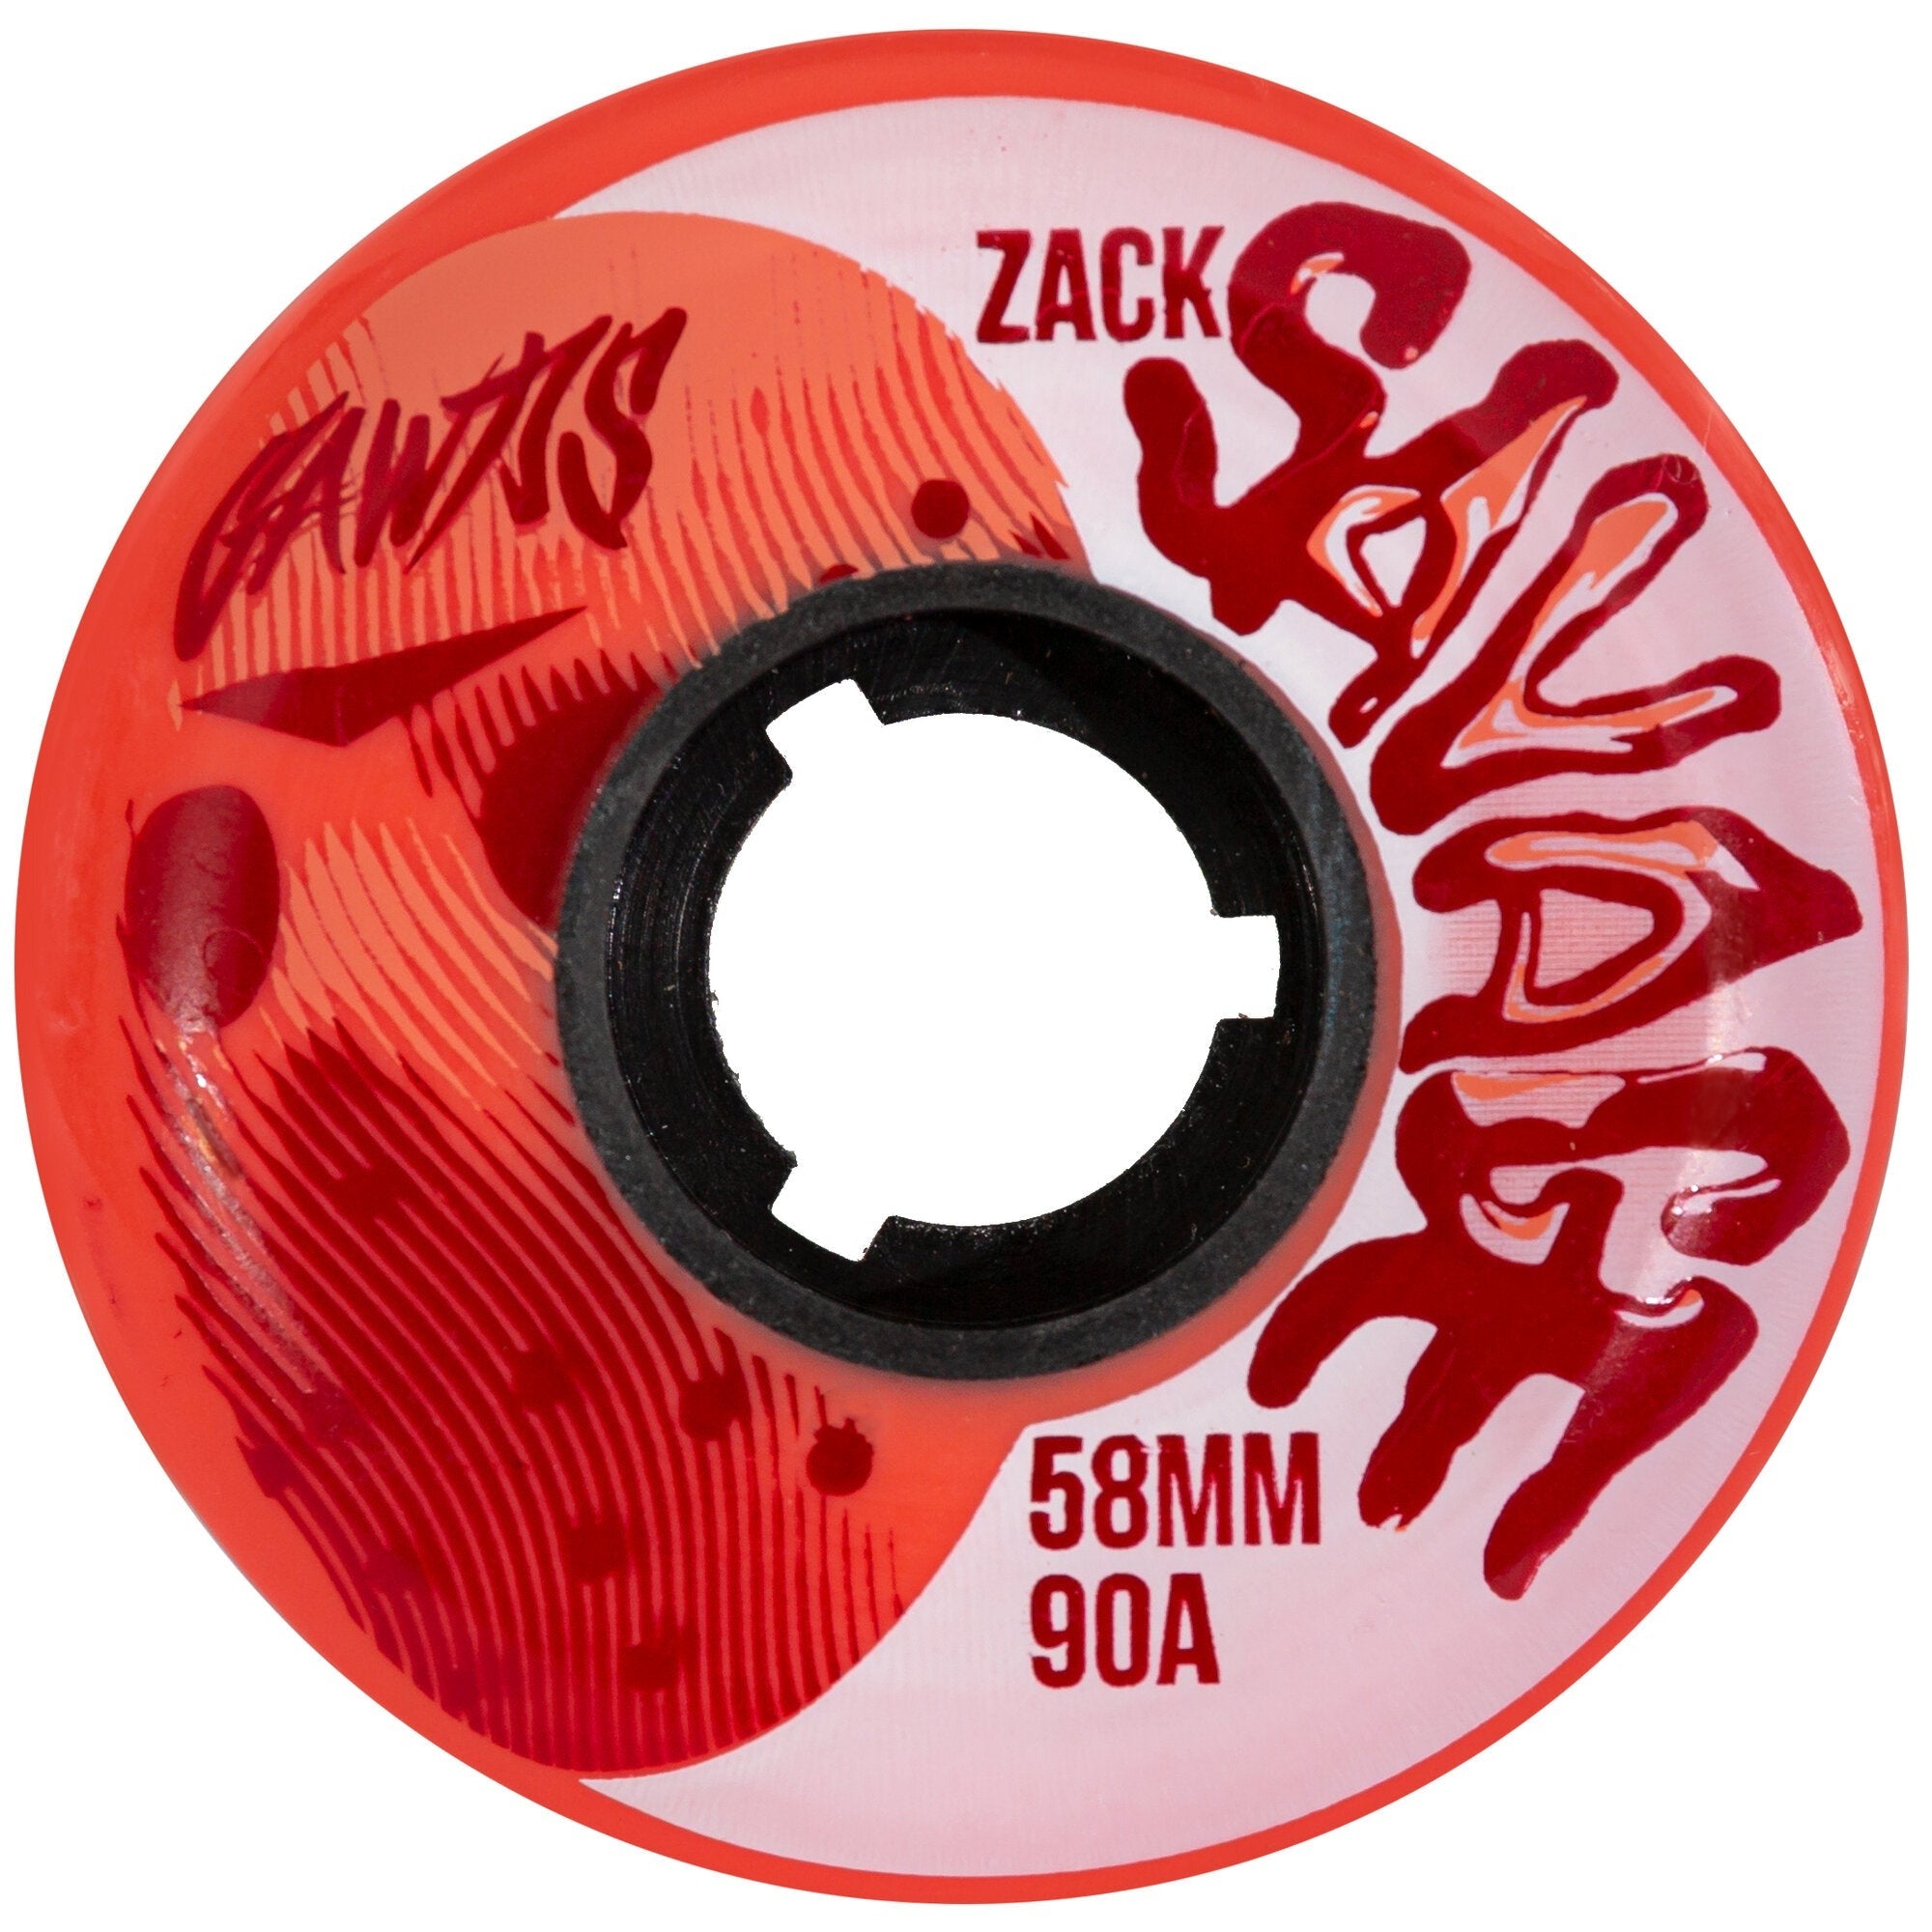 GAWDS - Savage 58mm/90a Aggressive Inline Skate Wheels